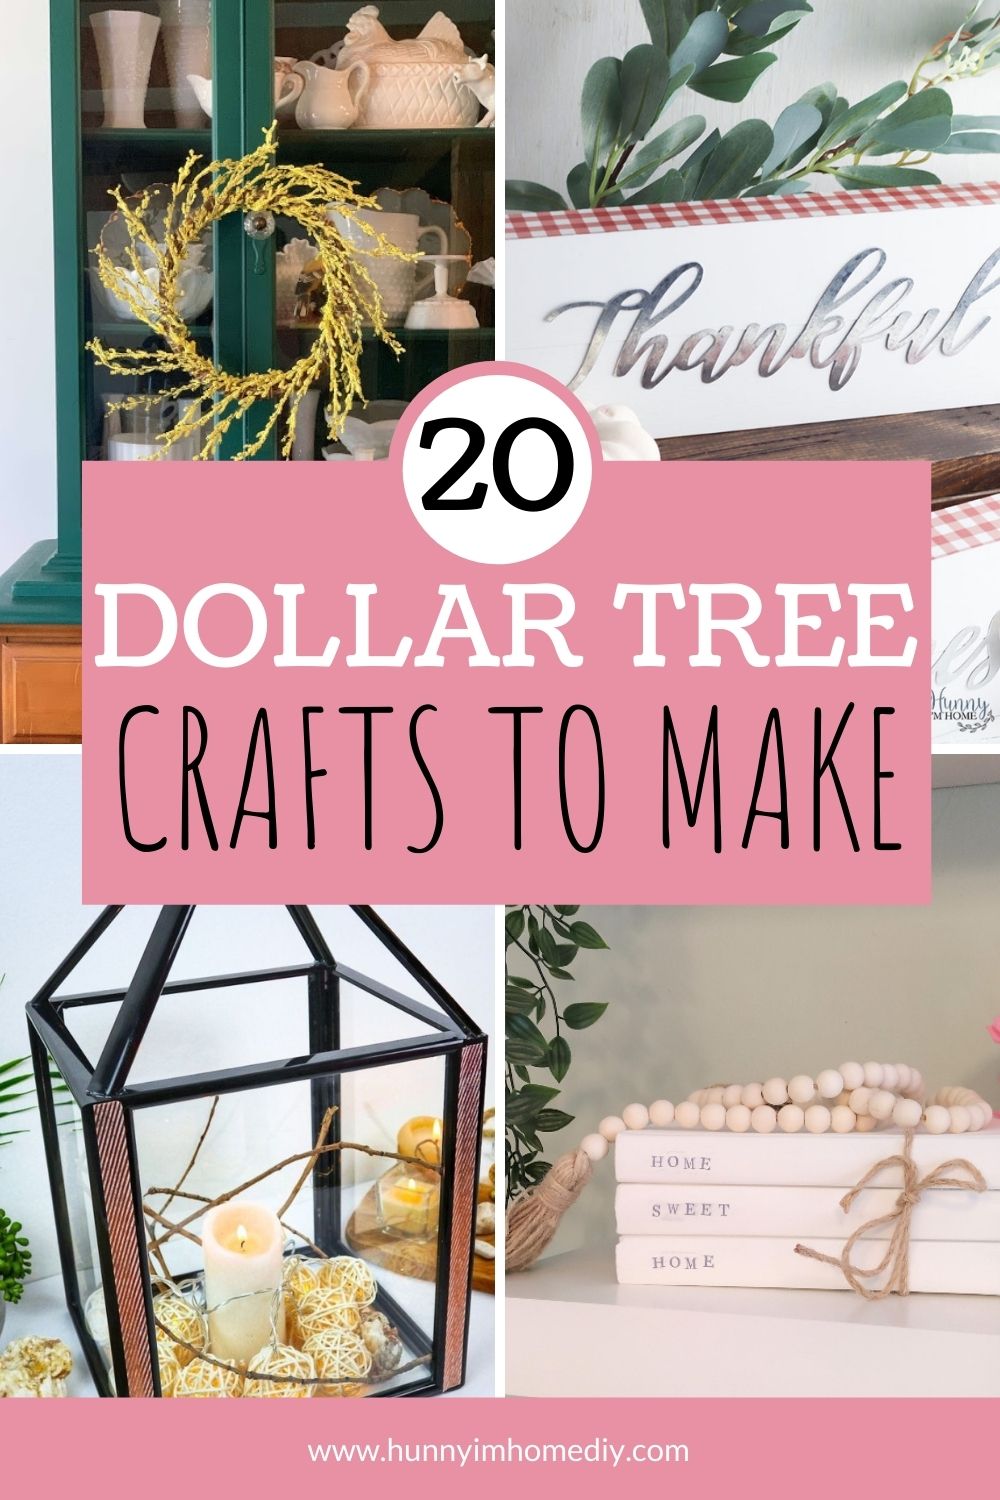 https://www.hunnyimhomediy.com/wp-content/uploads/2021/04/dollar-tree-crafts-to-make.jpg